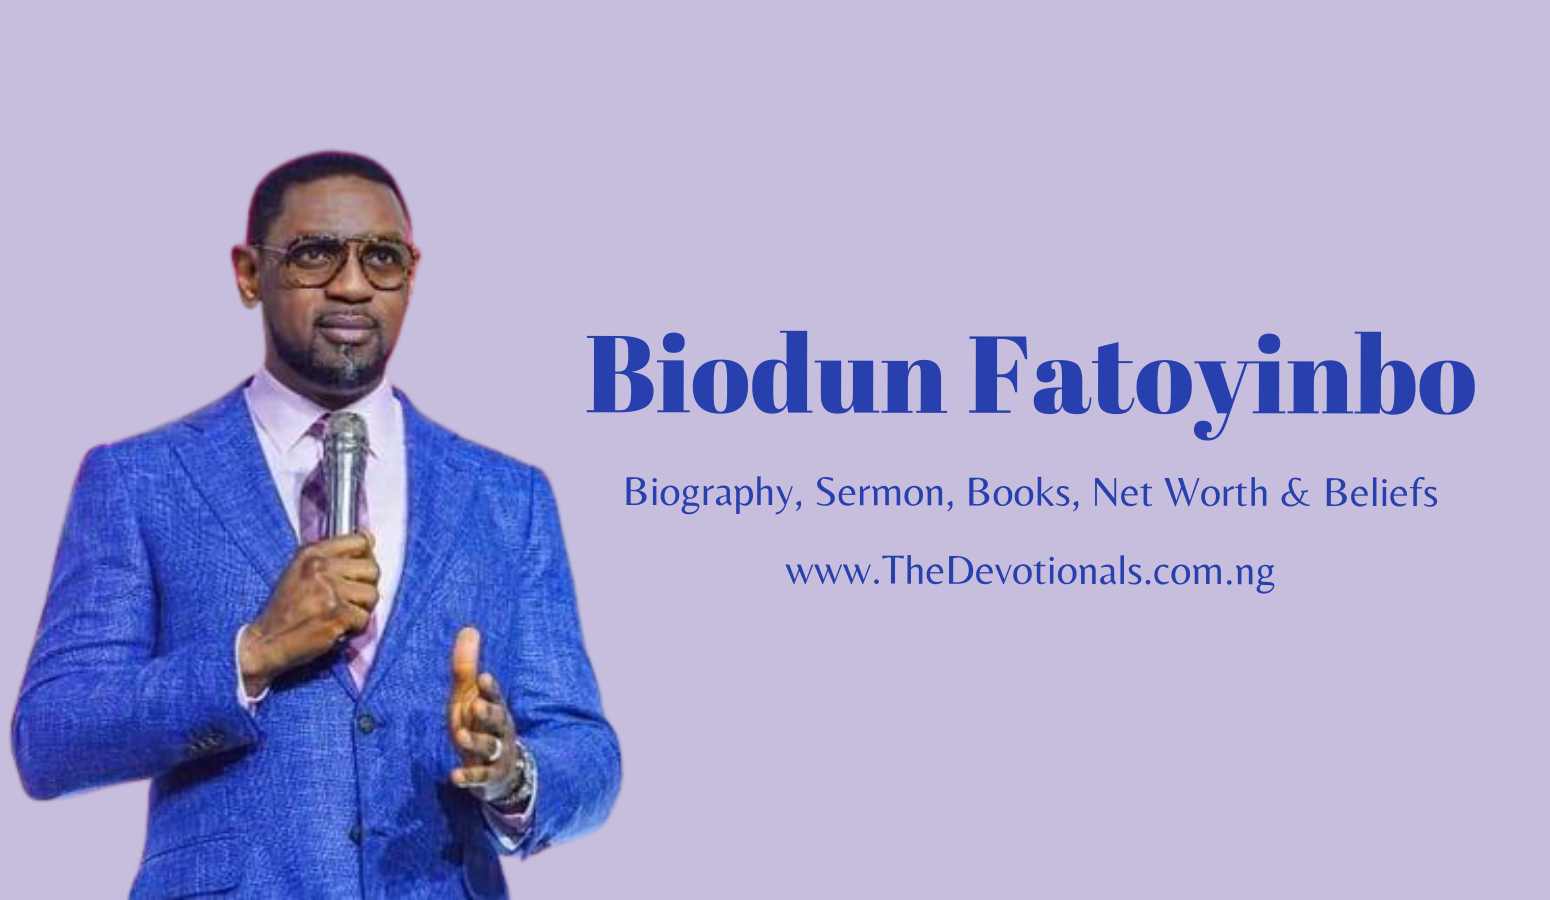 Pastor Biodun Fatoyinbo's Ministries